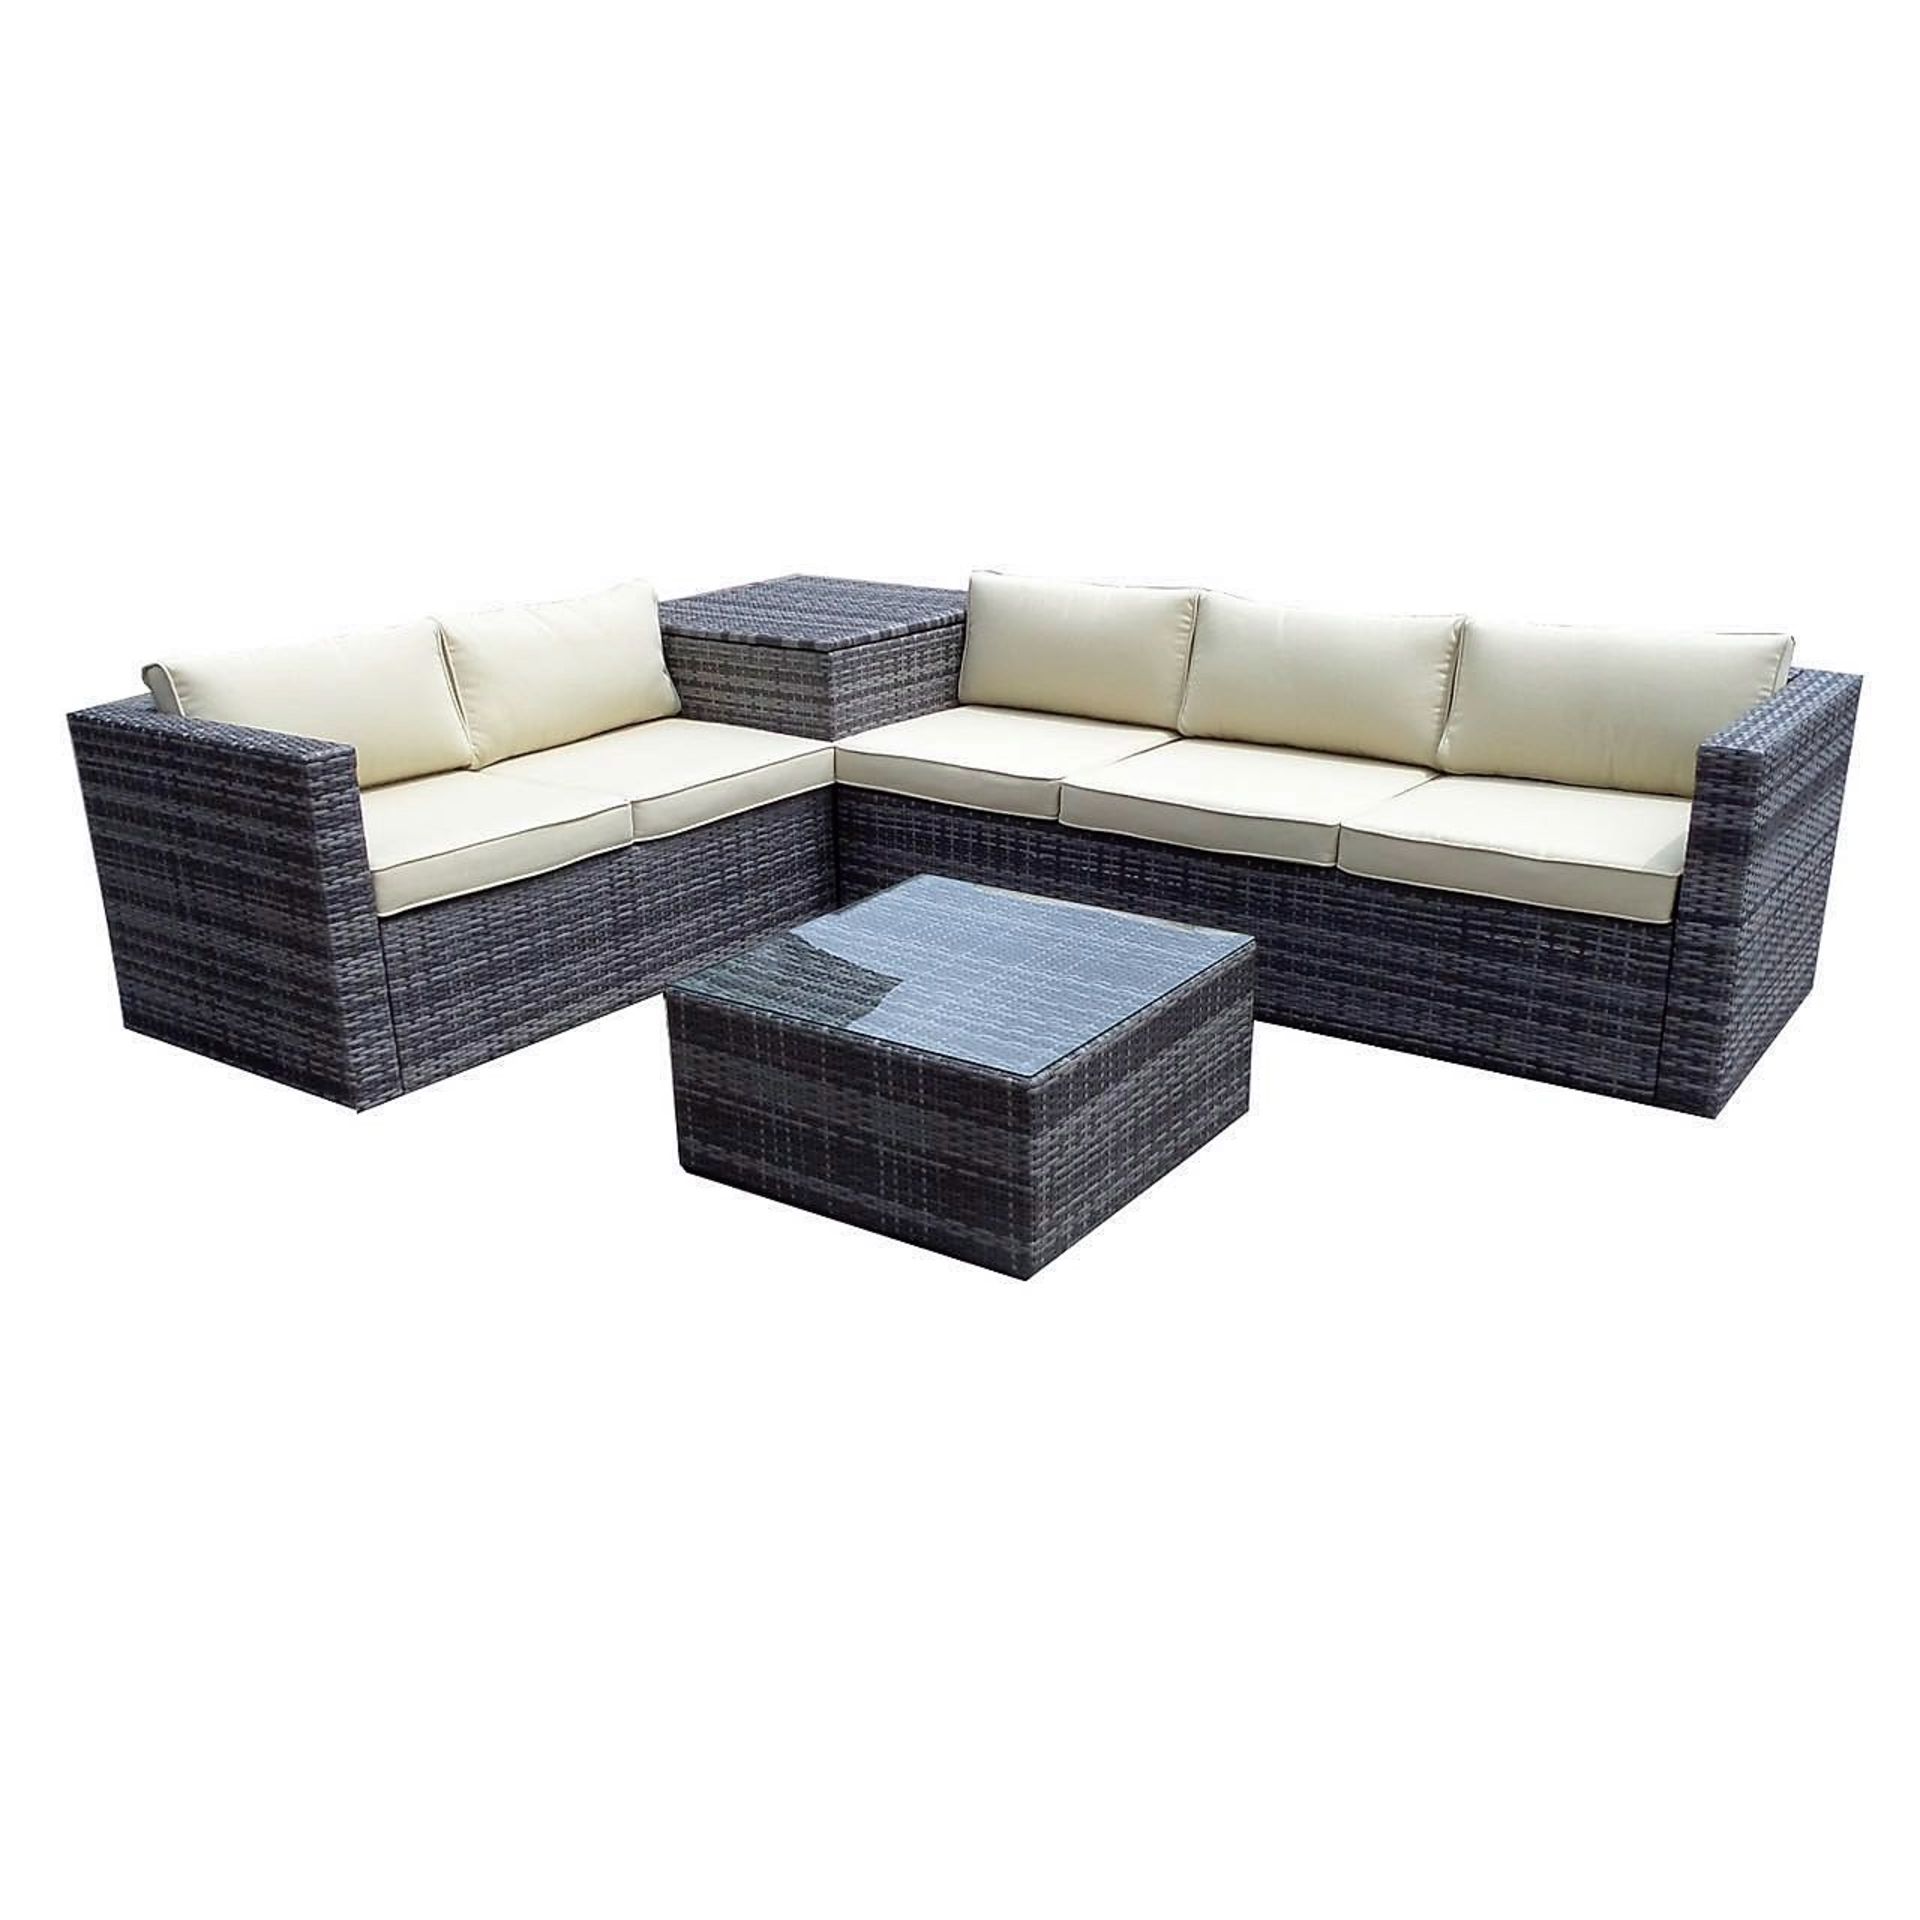 Brand New Zante Corner Sofa Sets Complete with Corner Storage Box for Cushions .